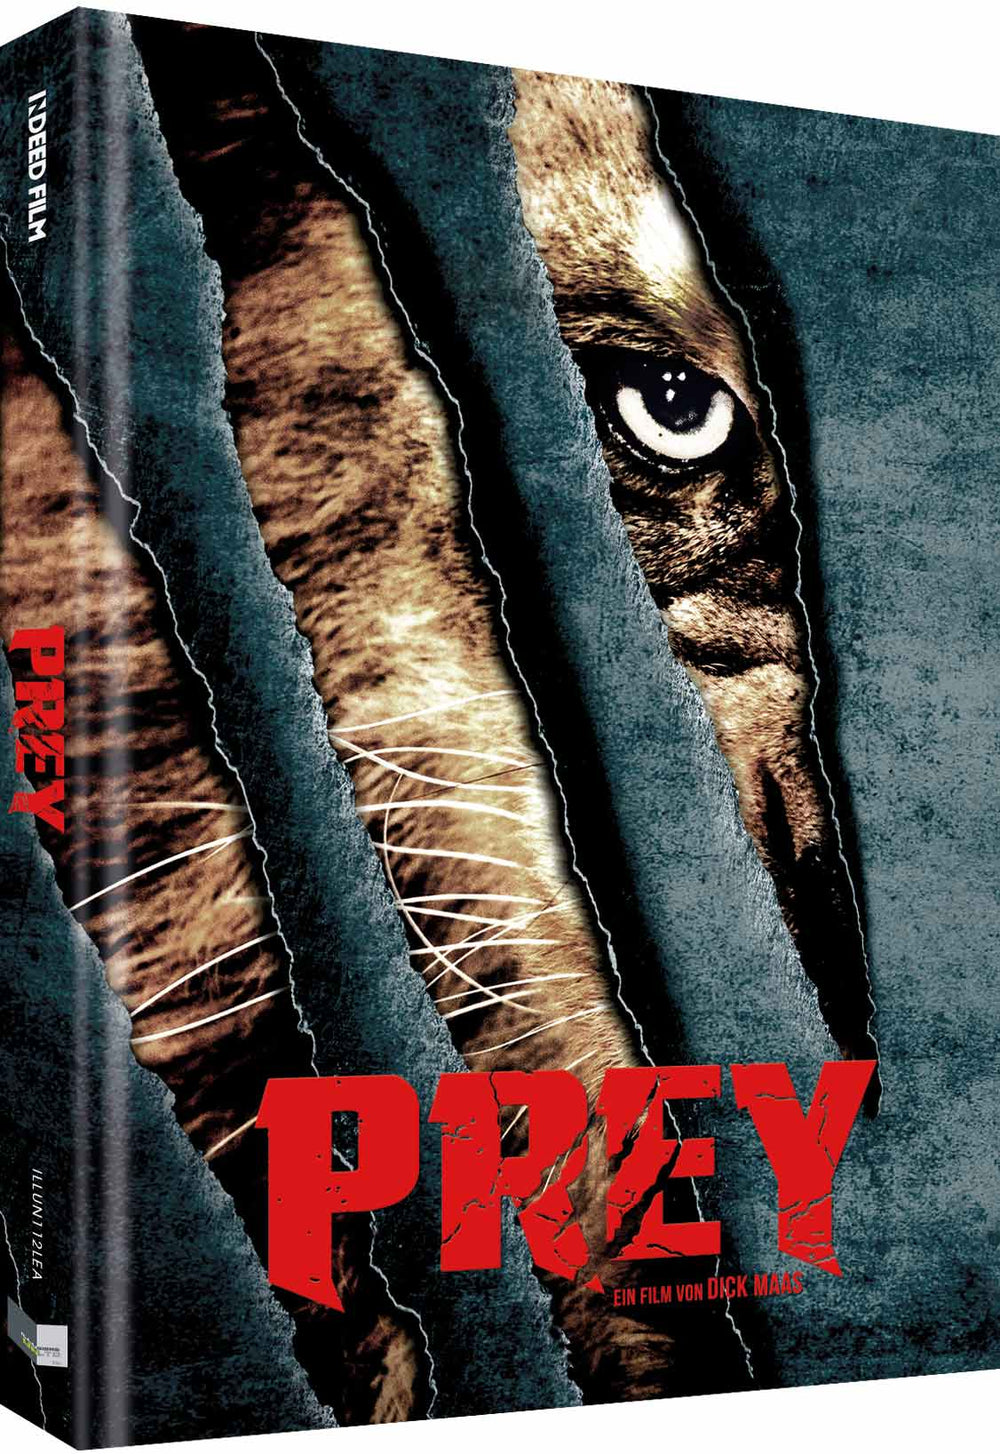 Prey - Beutejagd (aka Prooi) 2-Disc Limited Mediabook A